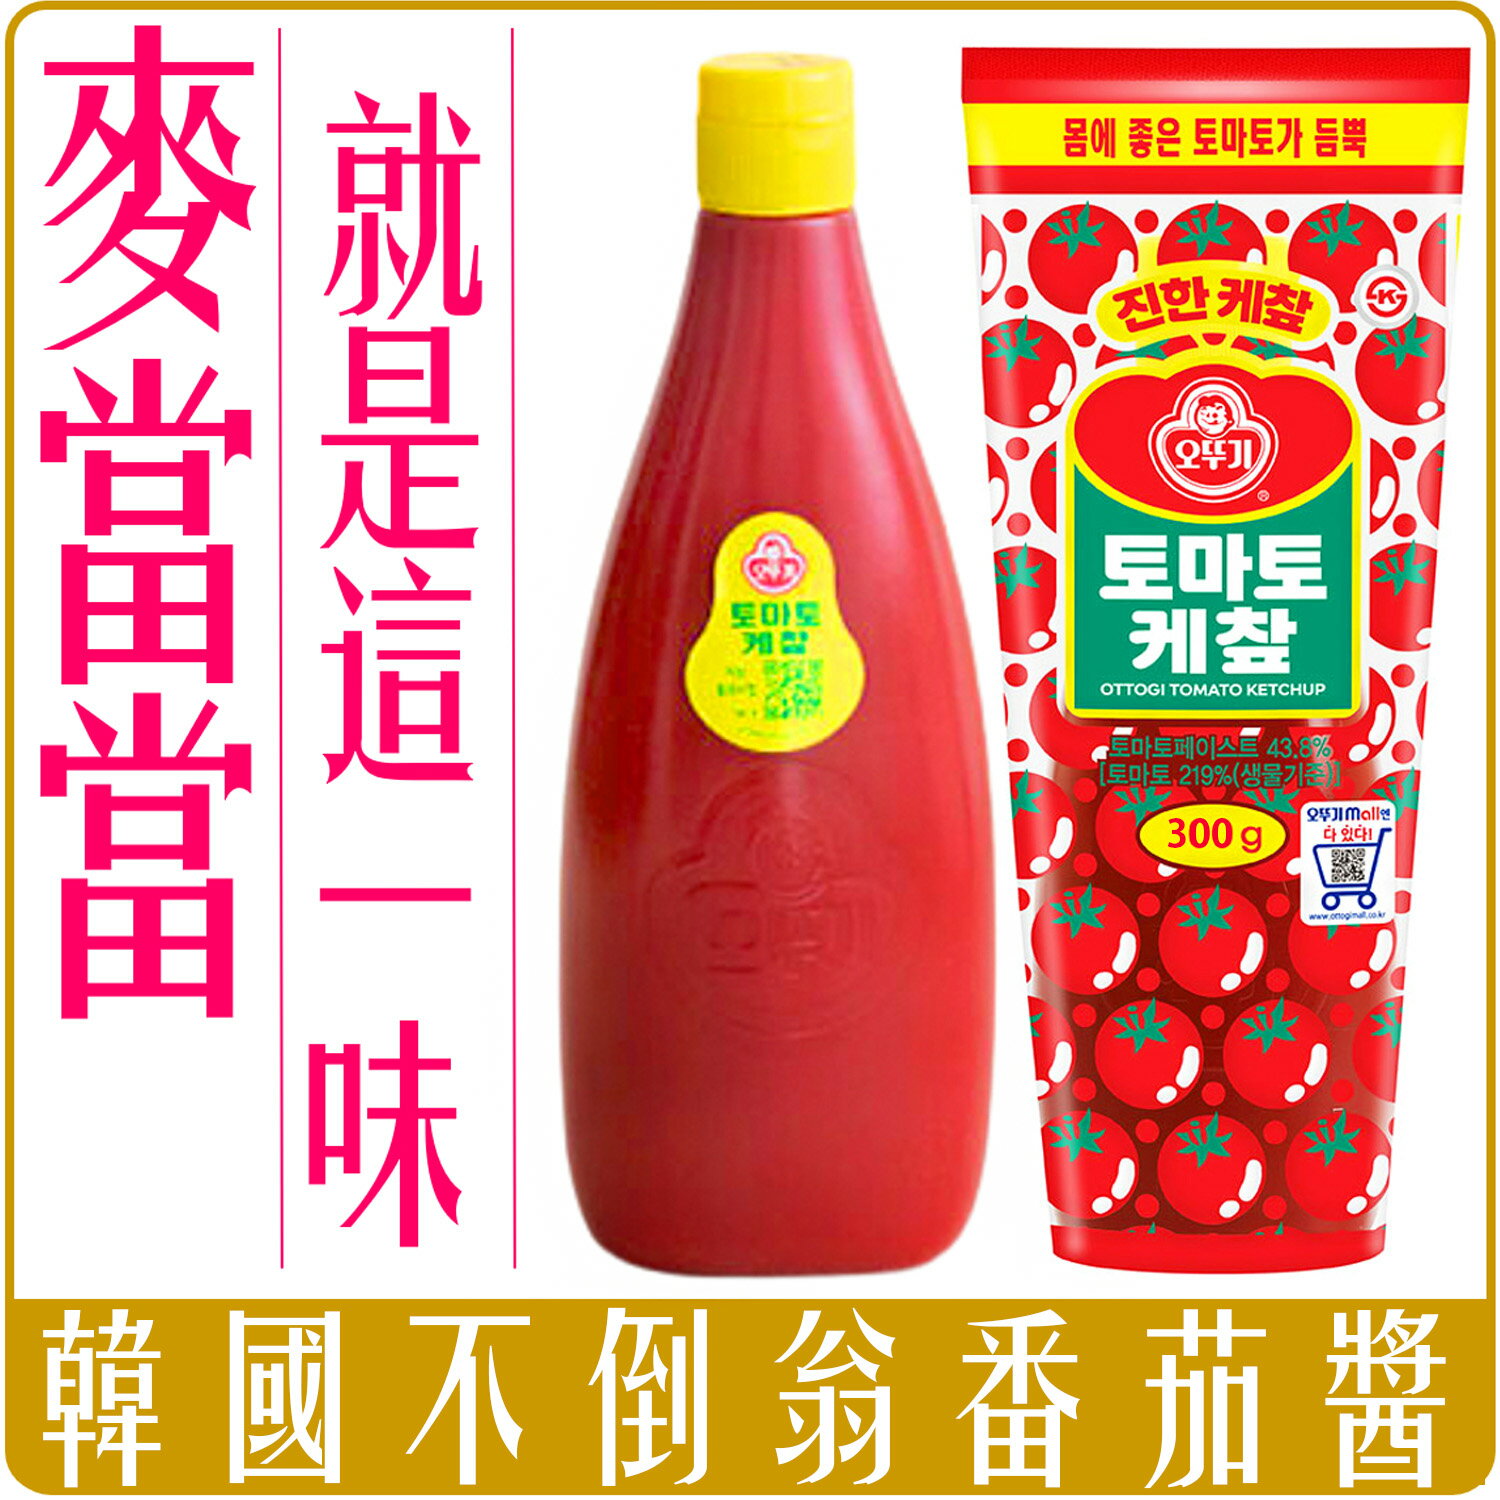 《 Chara 微百貨 》 韓國 不倒翁 番茄醬 200g / 300g 麥當當 指定使用 團購 批發